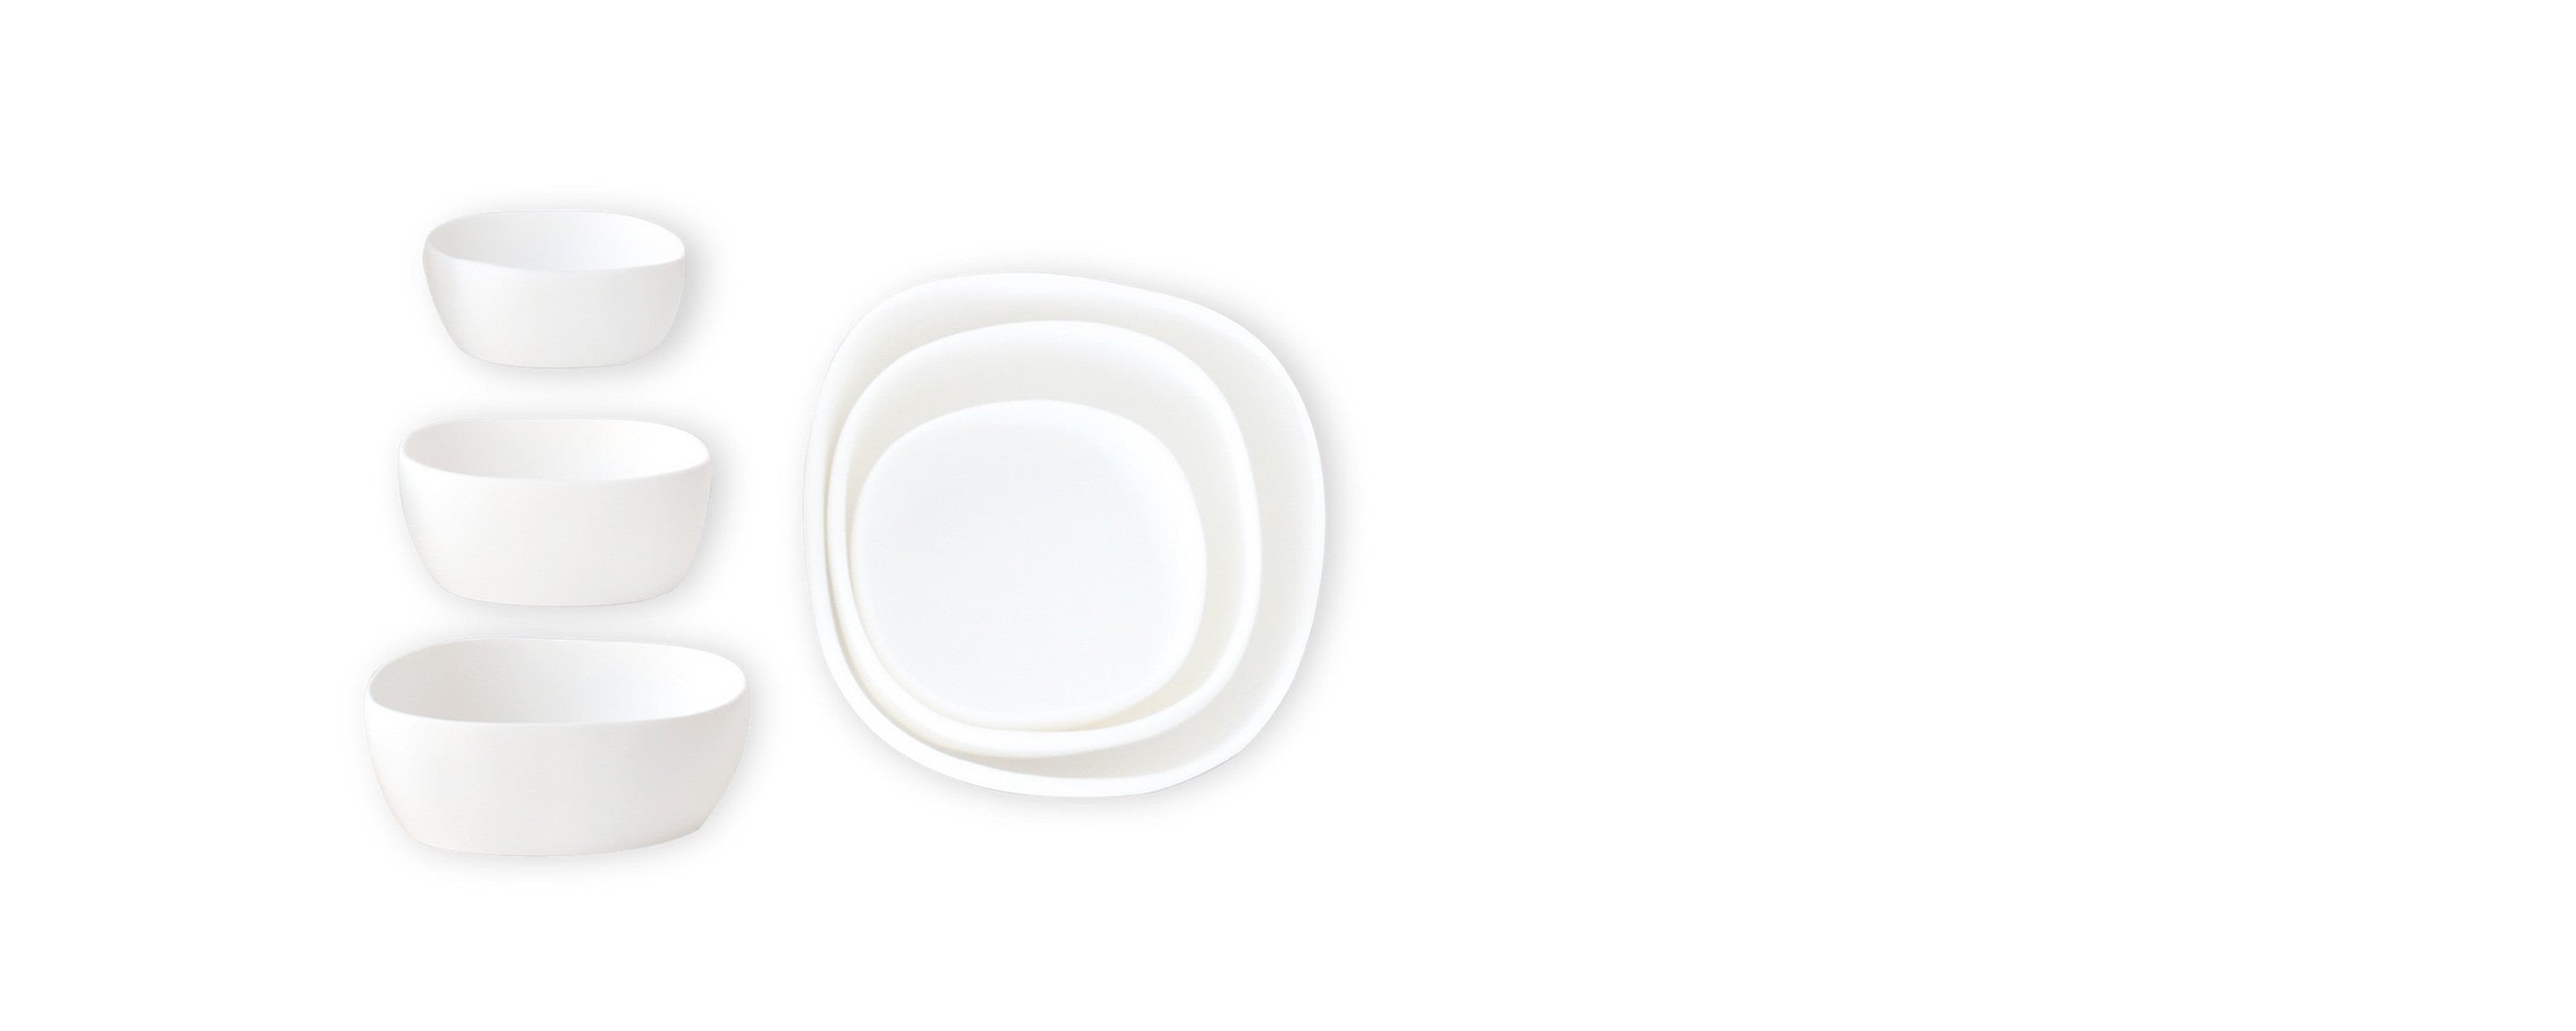 restin nested white bowls by tina frey